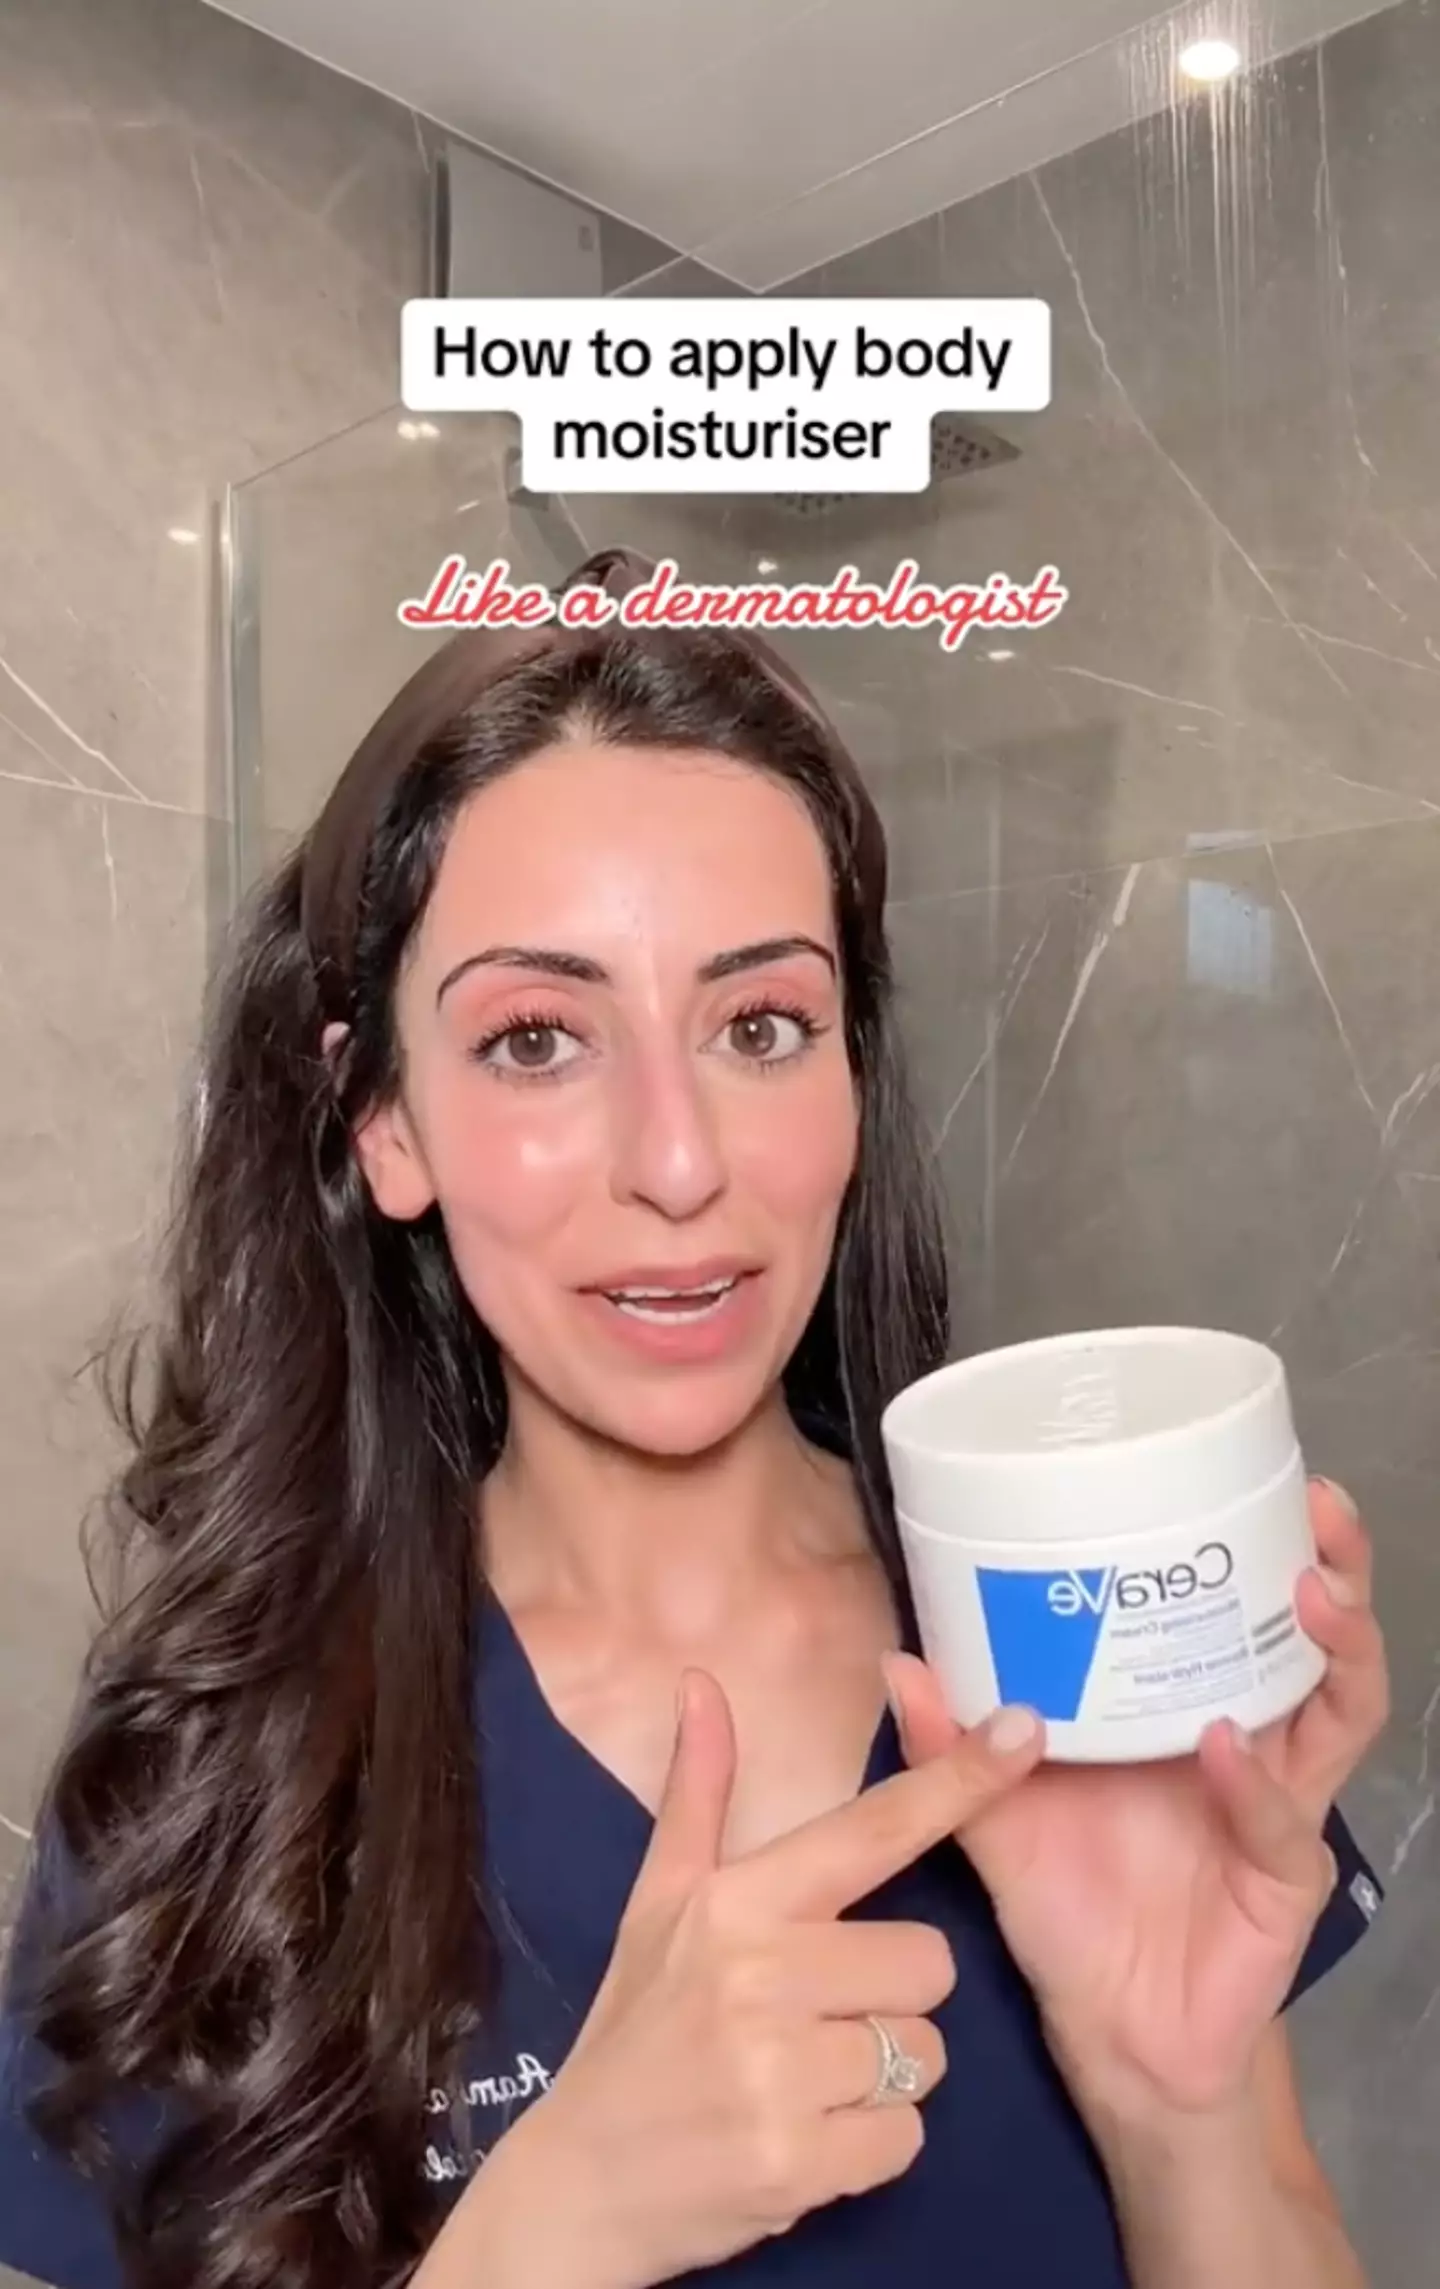 Dr Adel took to TikTok to share the correct way to apply body moisturiser.